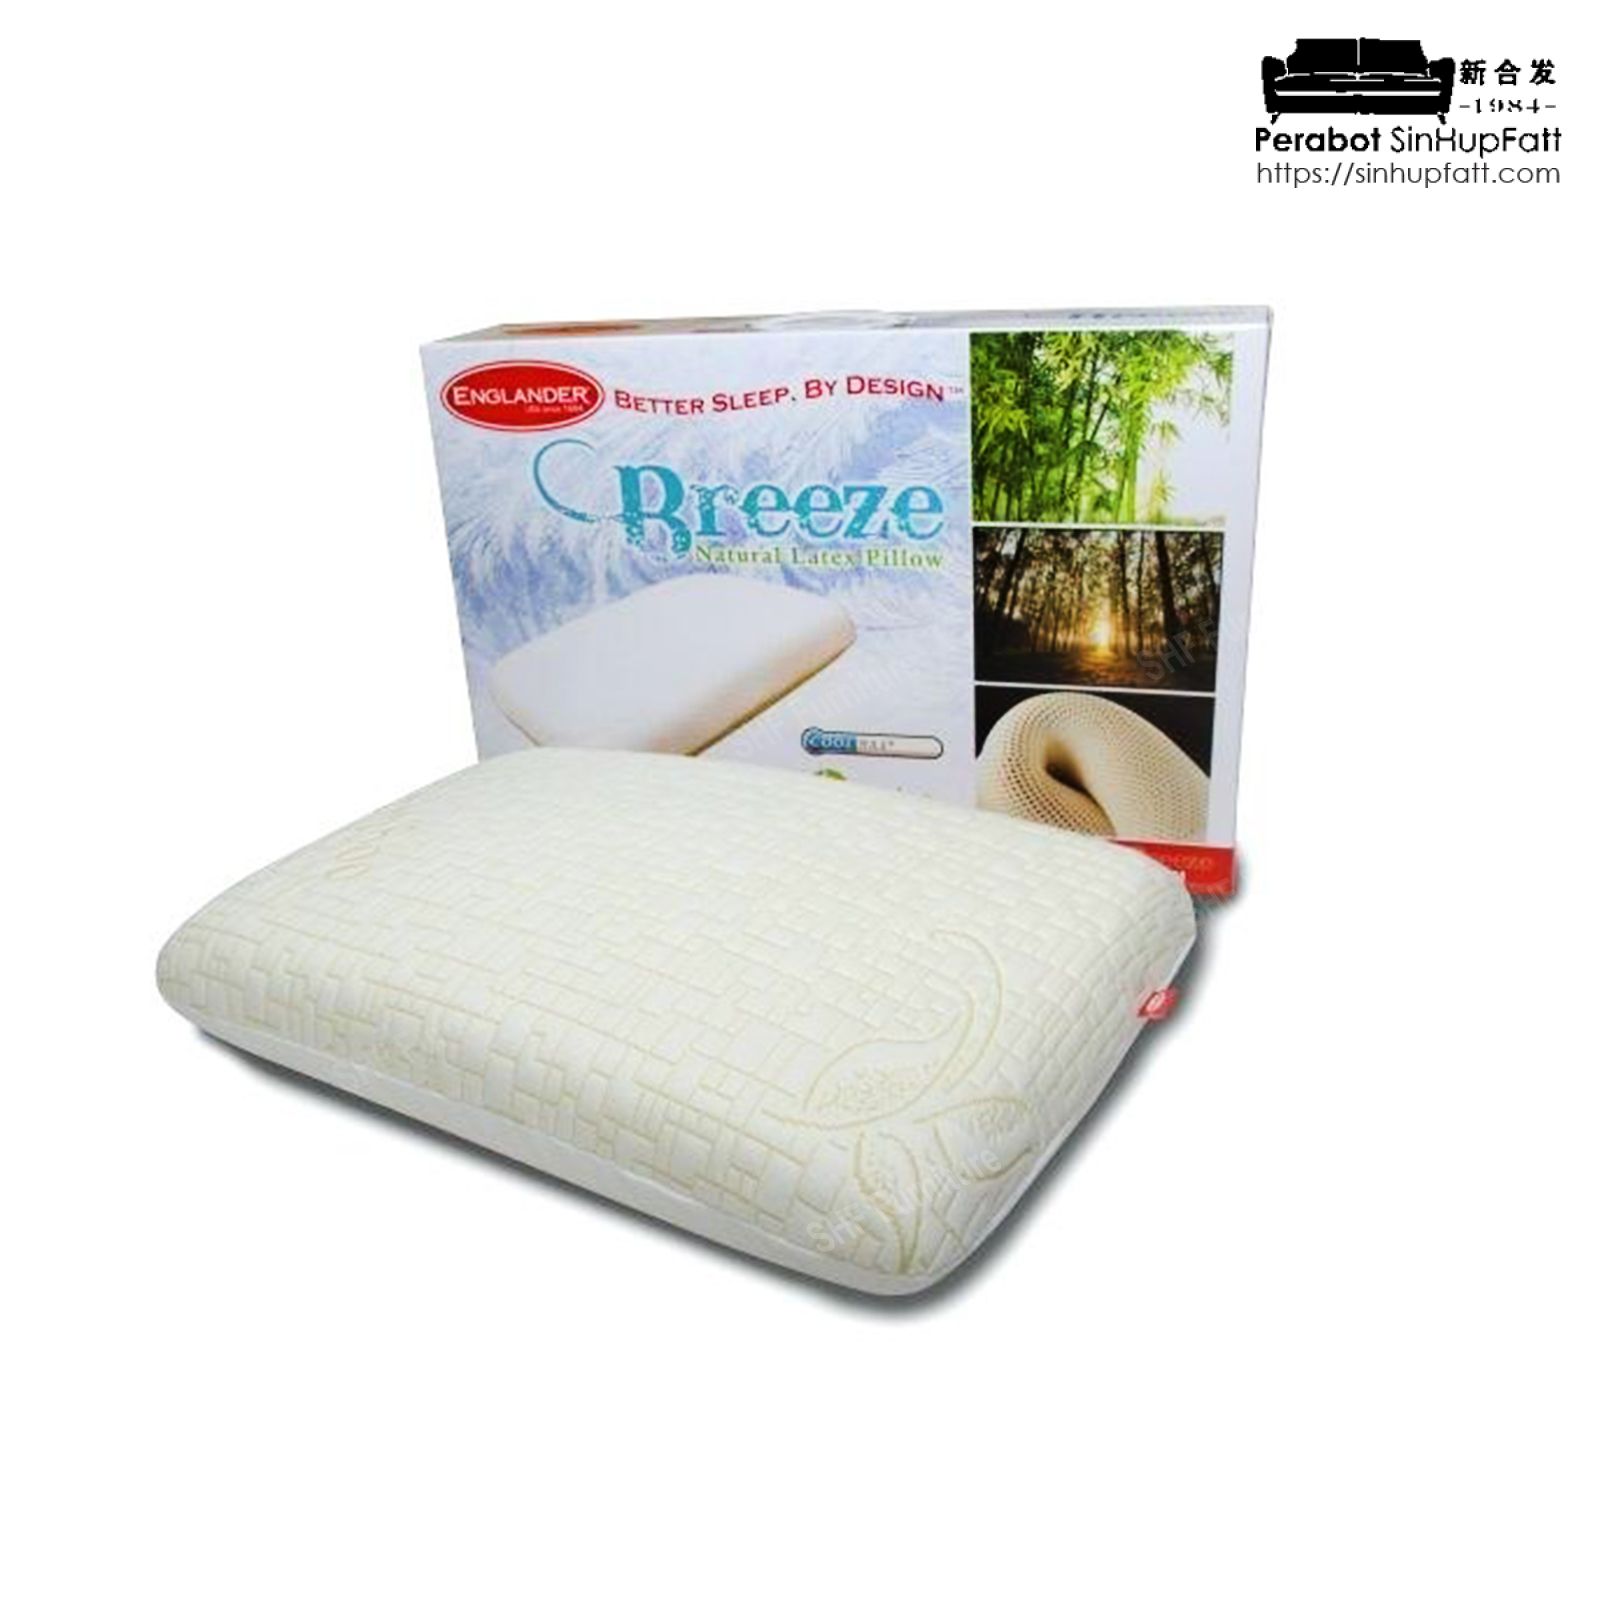 englander breeze natural latex pillow